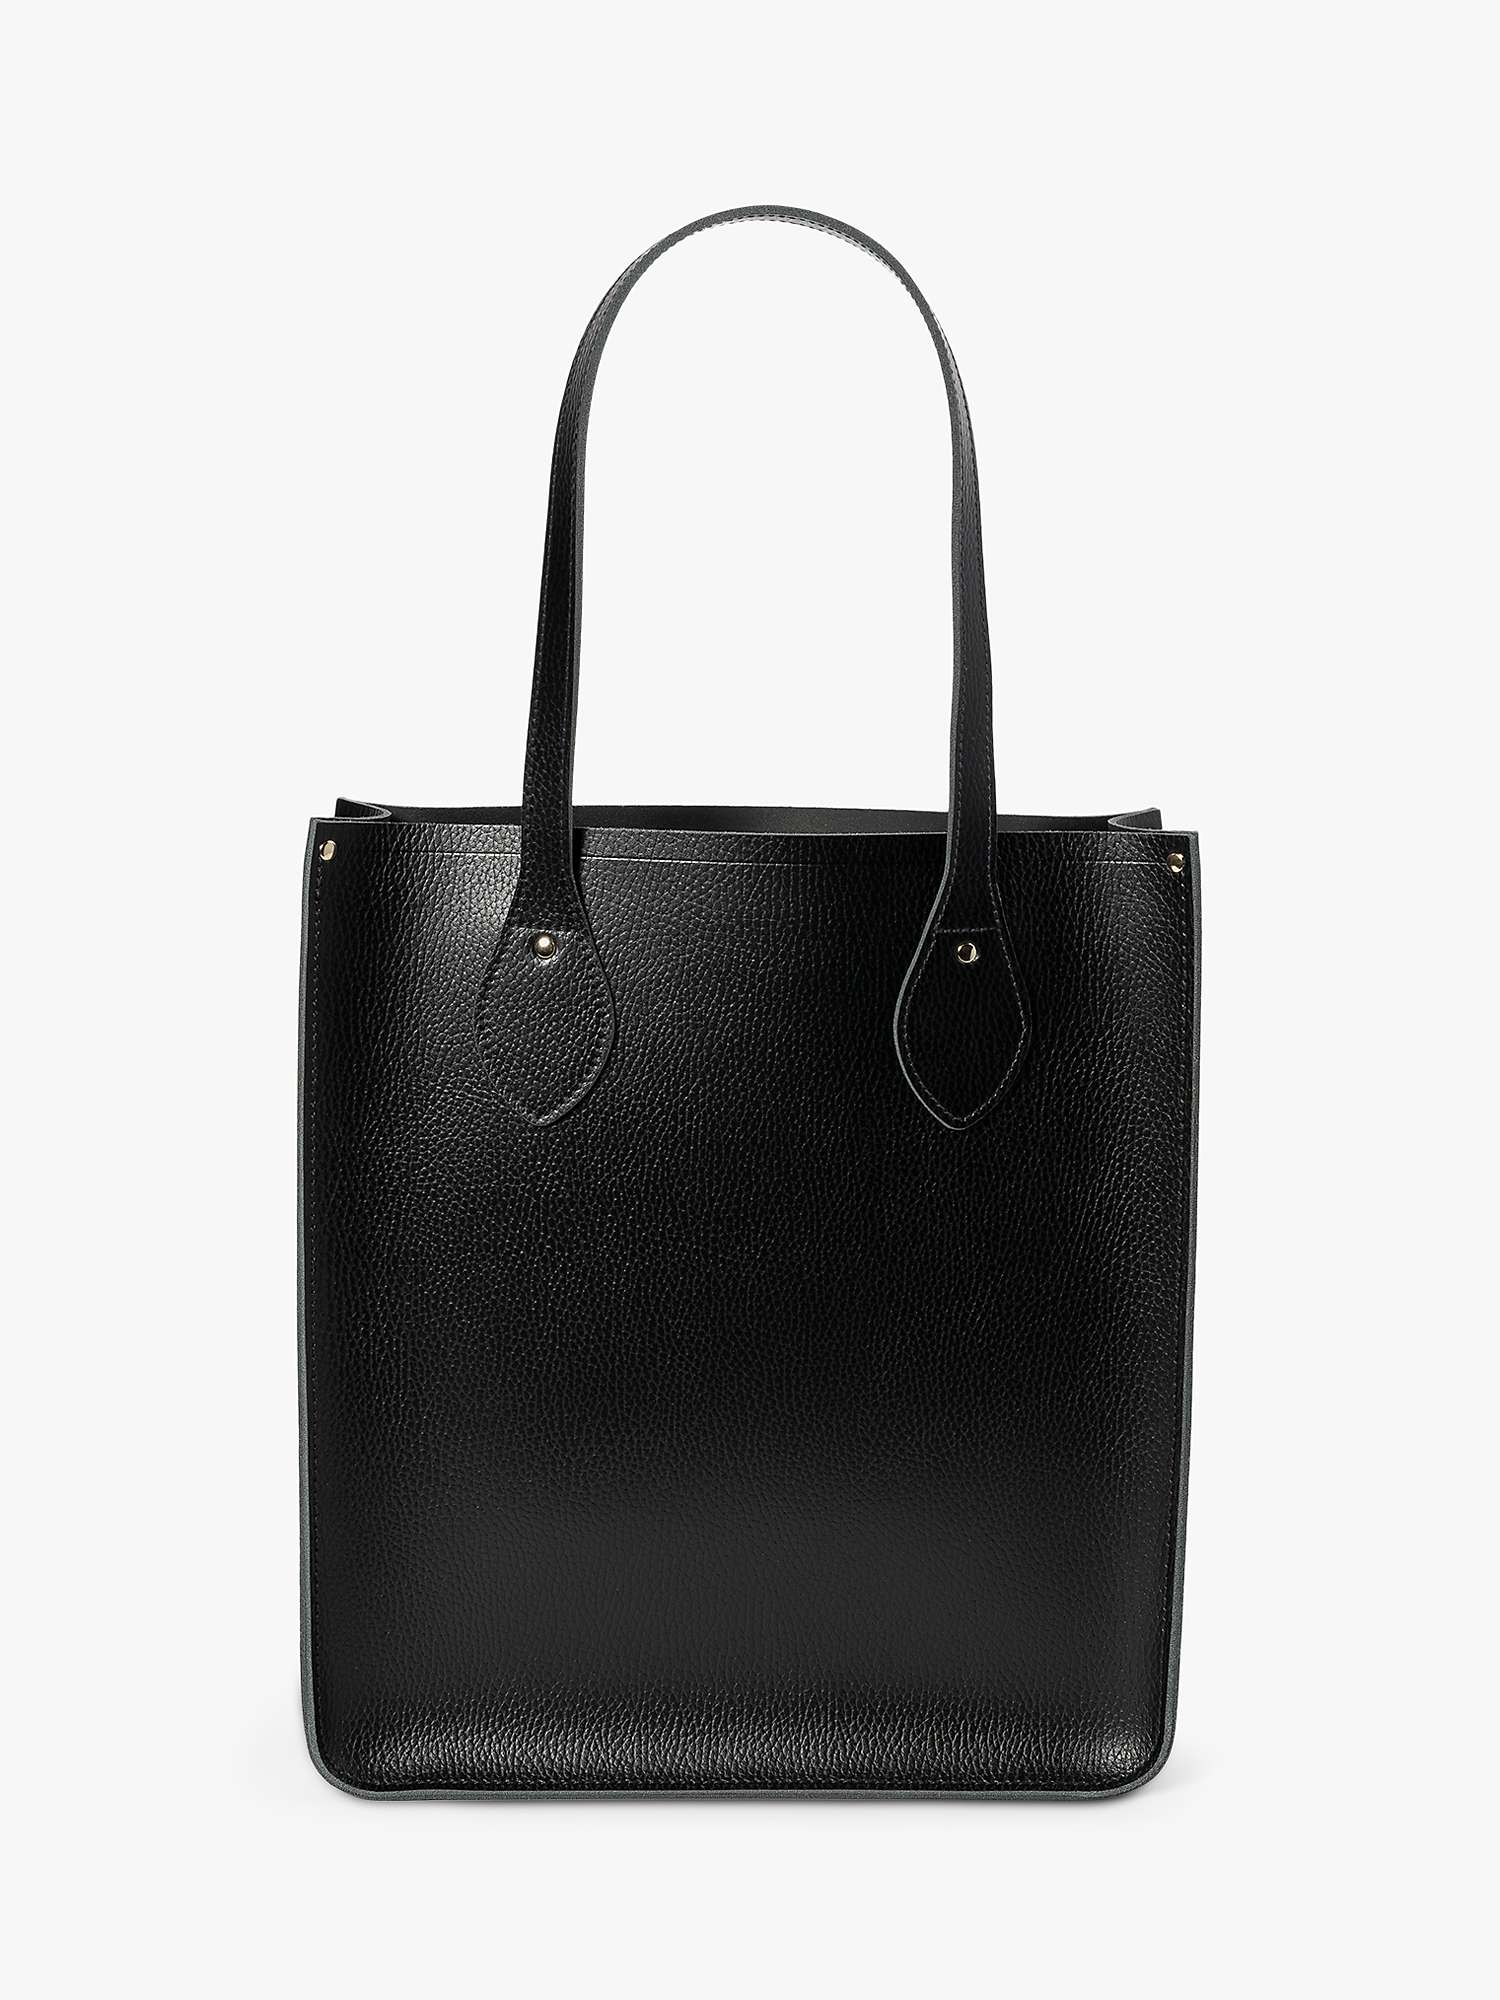 Buy Cambridge Satchel Tote Leather Bag Online at johnlewis.com